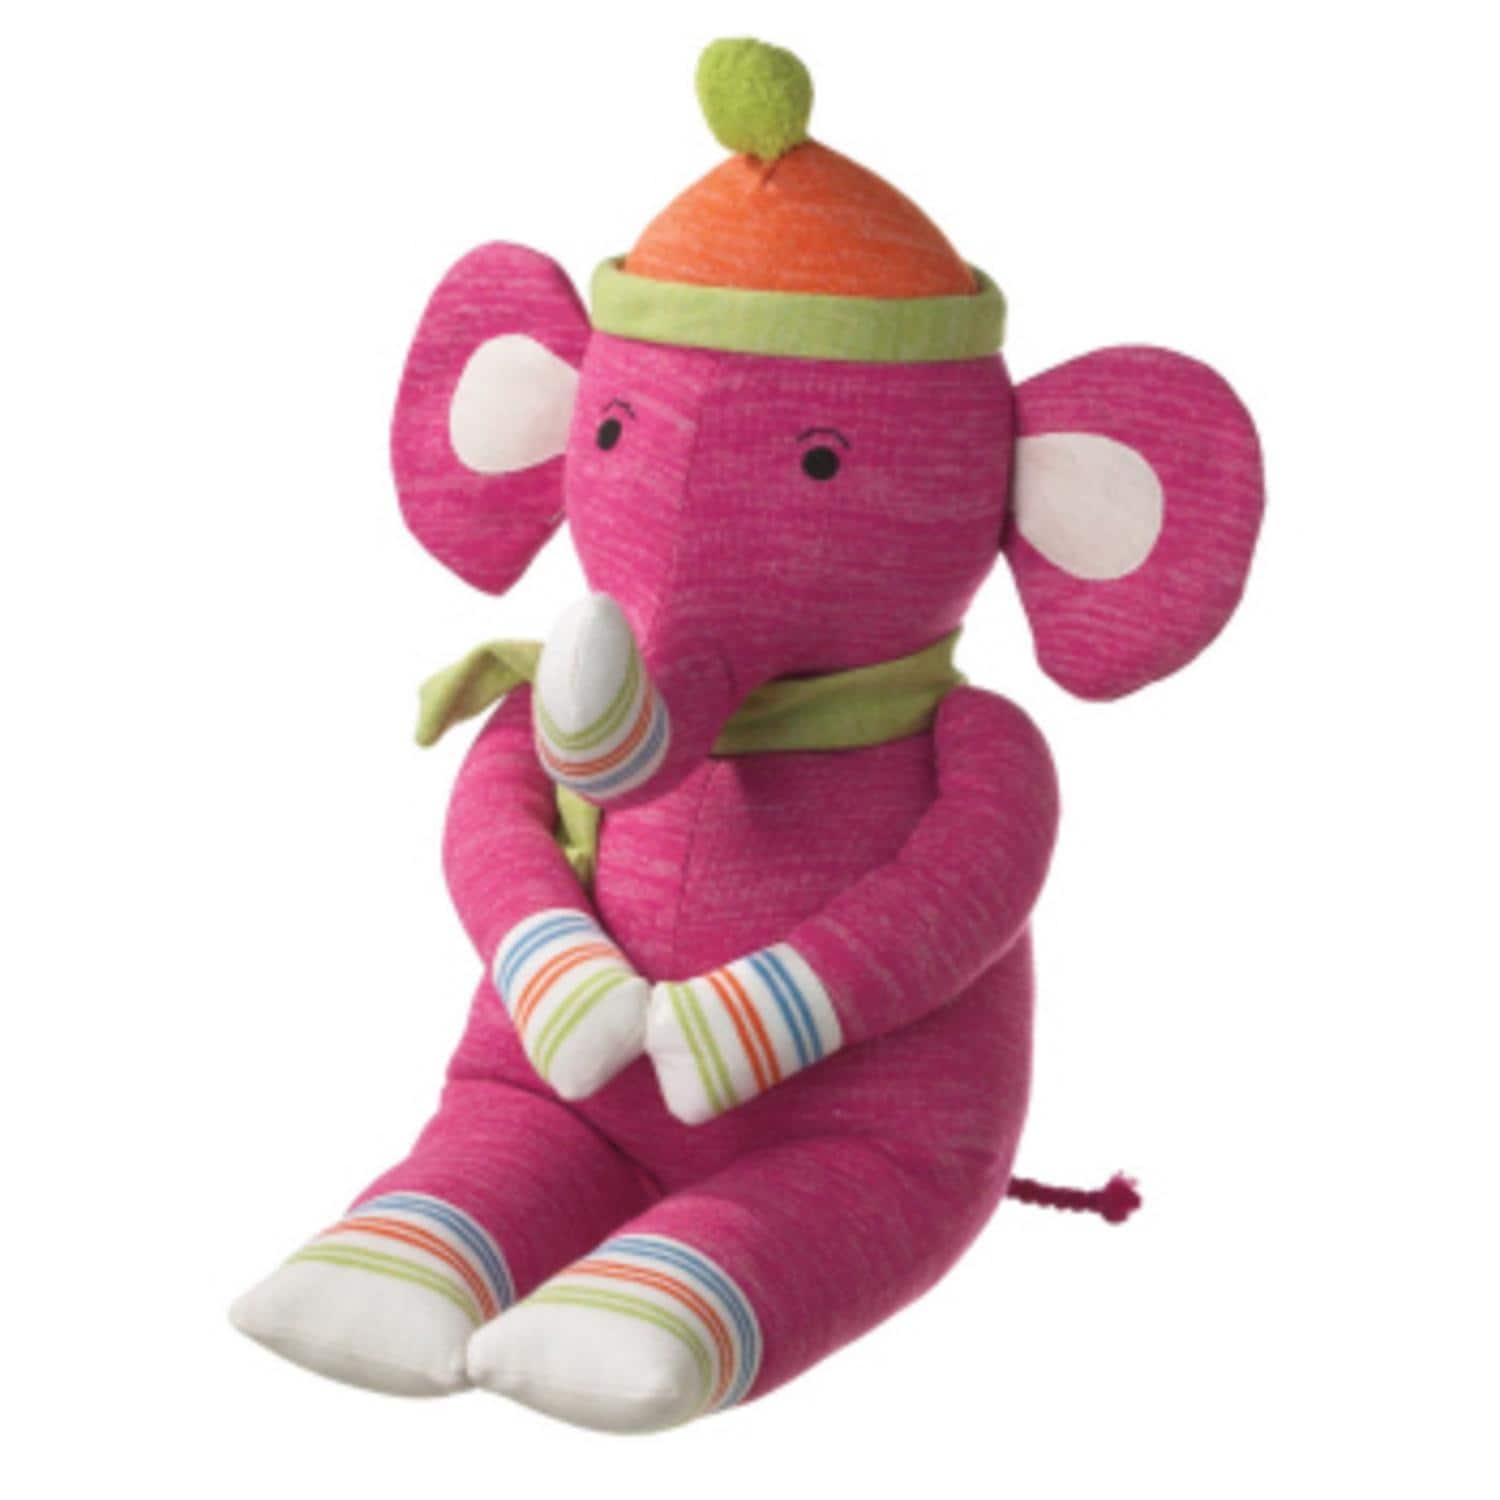 big pink stuffed elephant